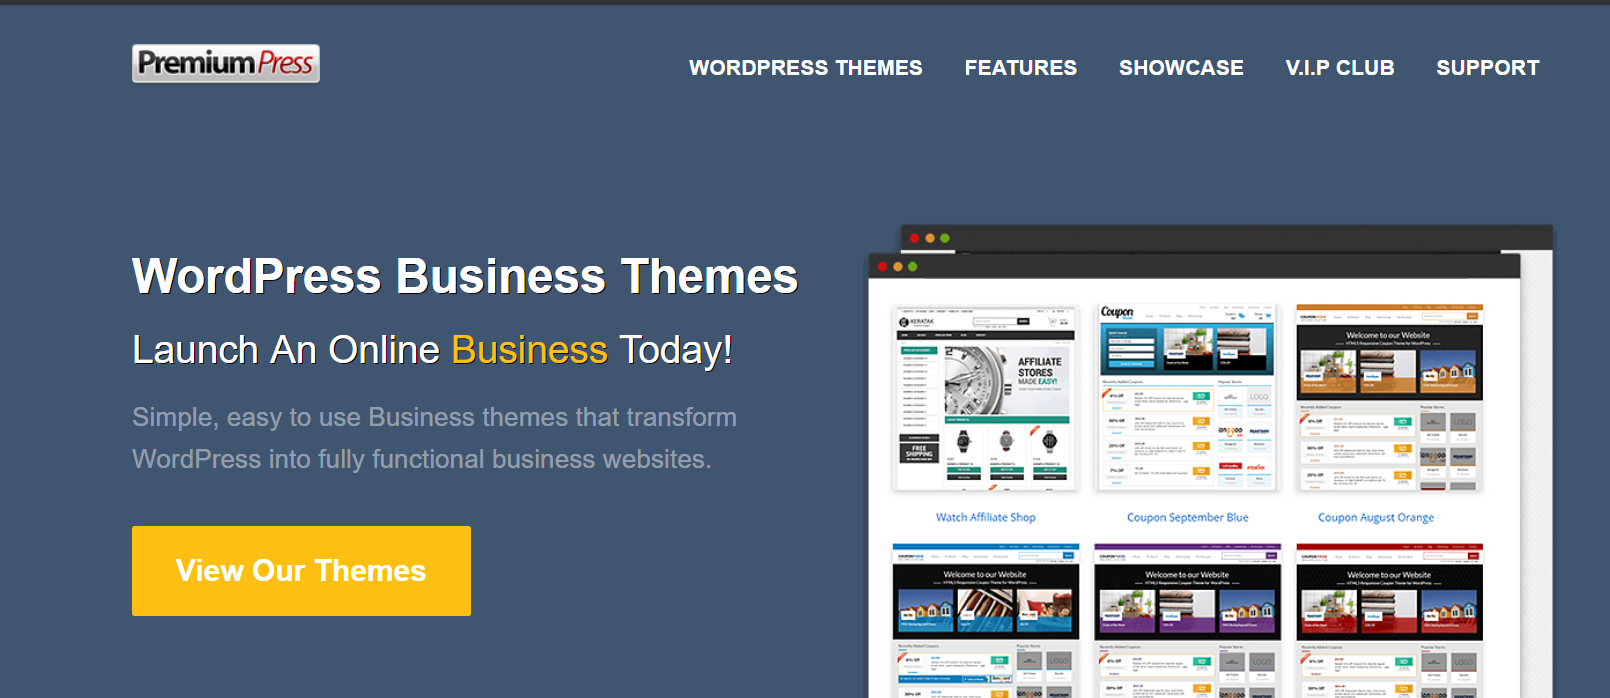 PremiumPress Review- WordPress Business Themes